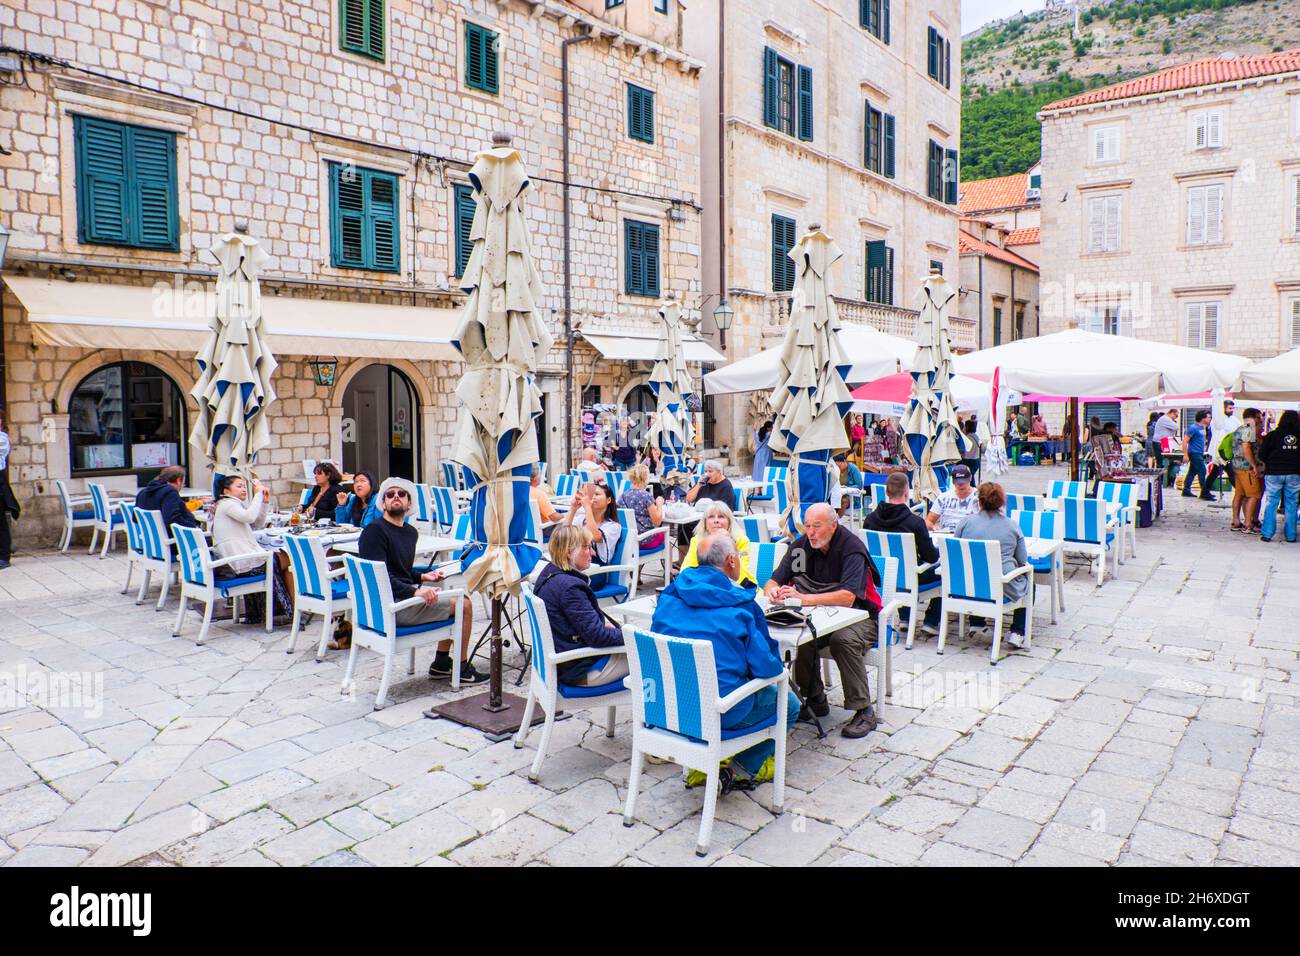 Cafe restaurant Kamenice, Gunduliceva Poljana, Grad, old town, Dubrovnik, Croatia Stock Photo